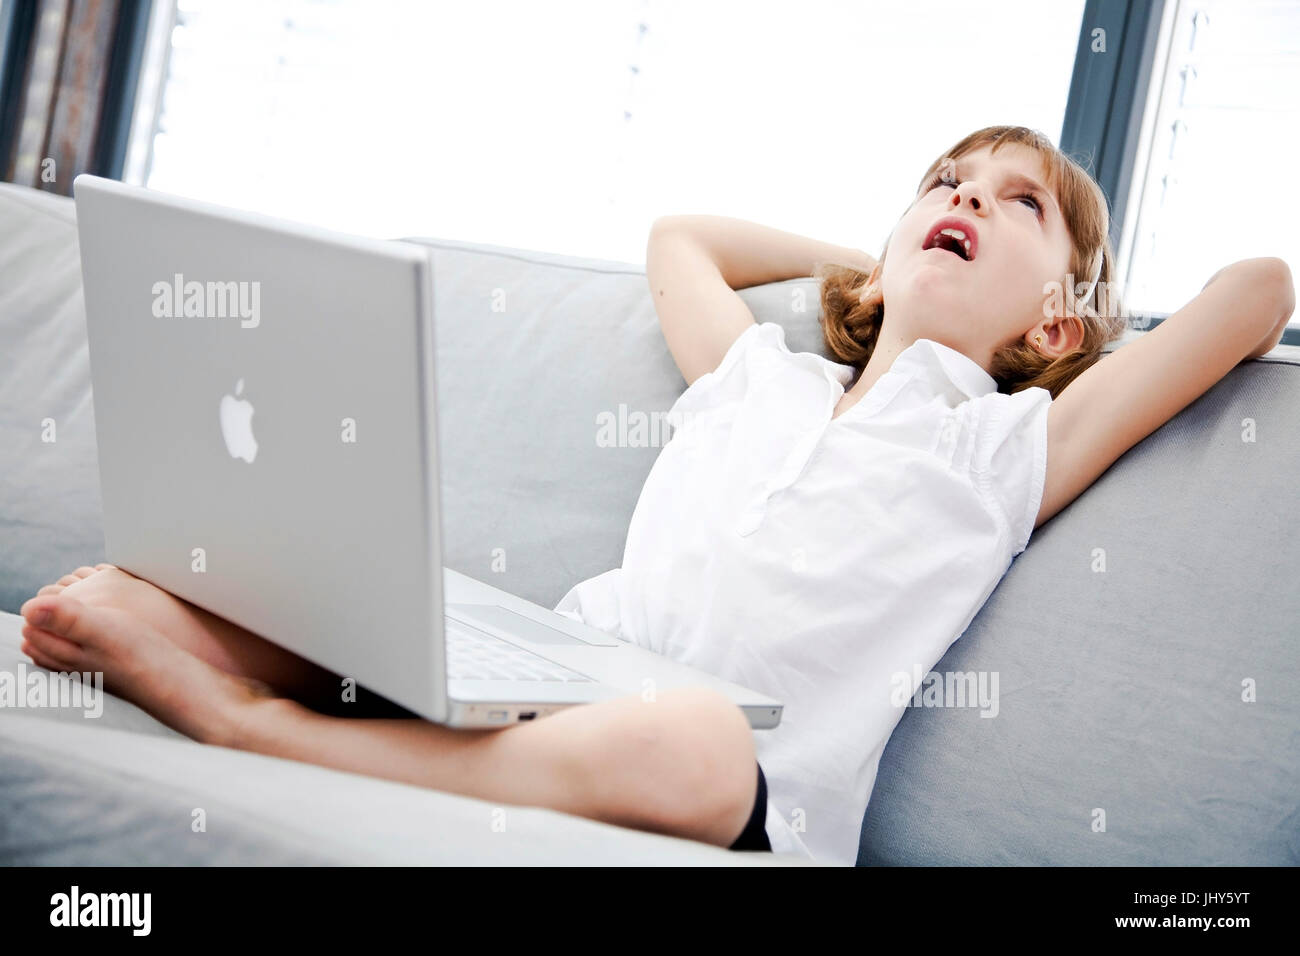 Girls with laptop, Maedchen mit Laptop Stock Photo